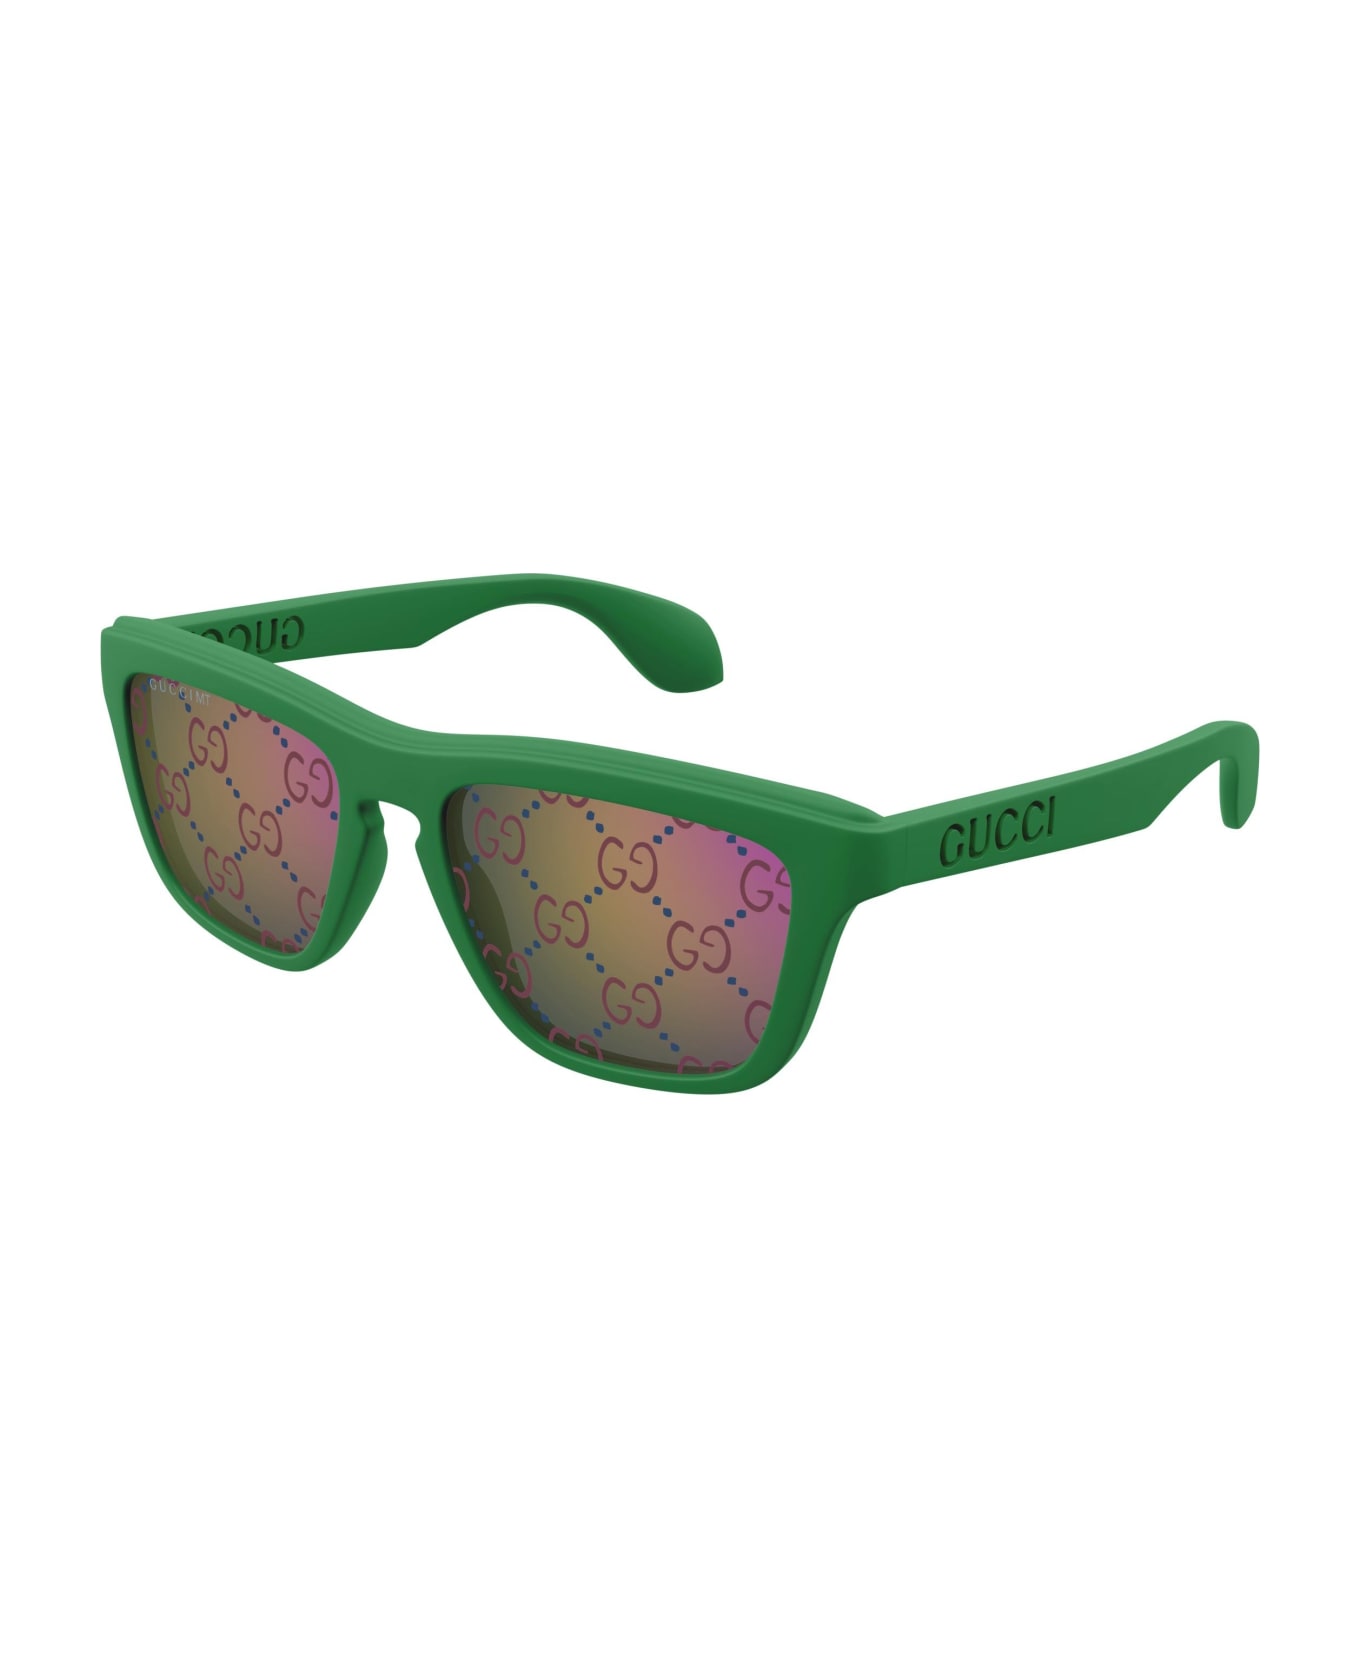 Gucci Eyewear Sunglasses - Verde/Blu